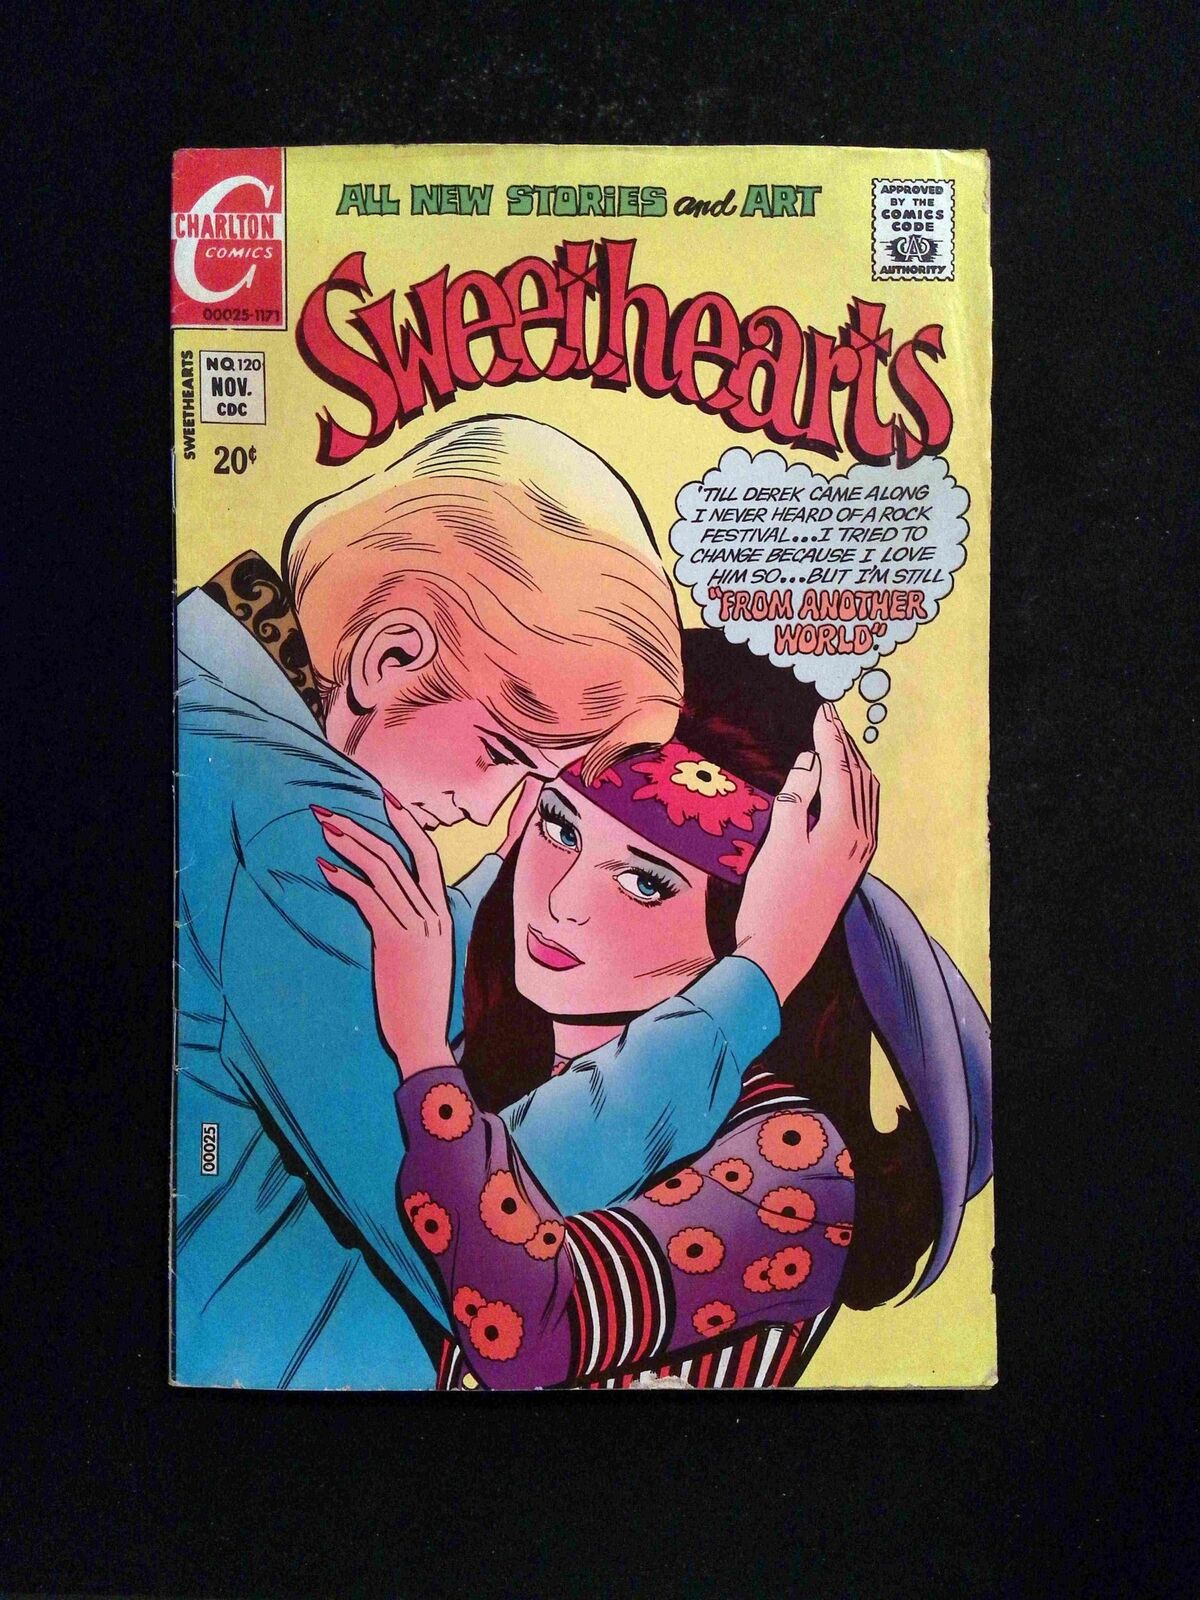 Sweethearts Vol.2 #120  CHARLTON  Comics 1971 VG+